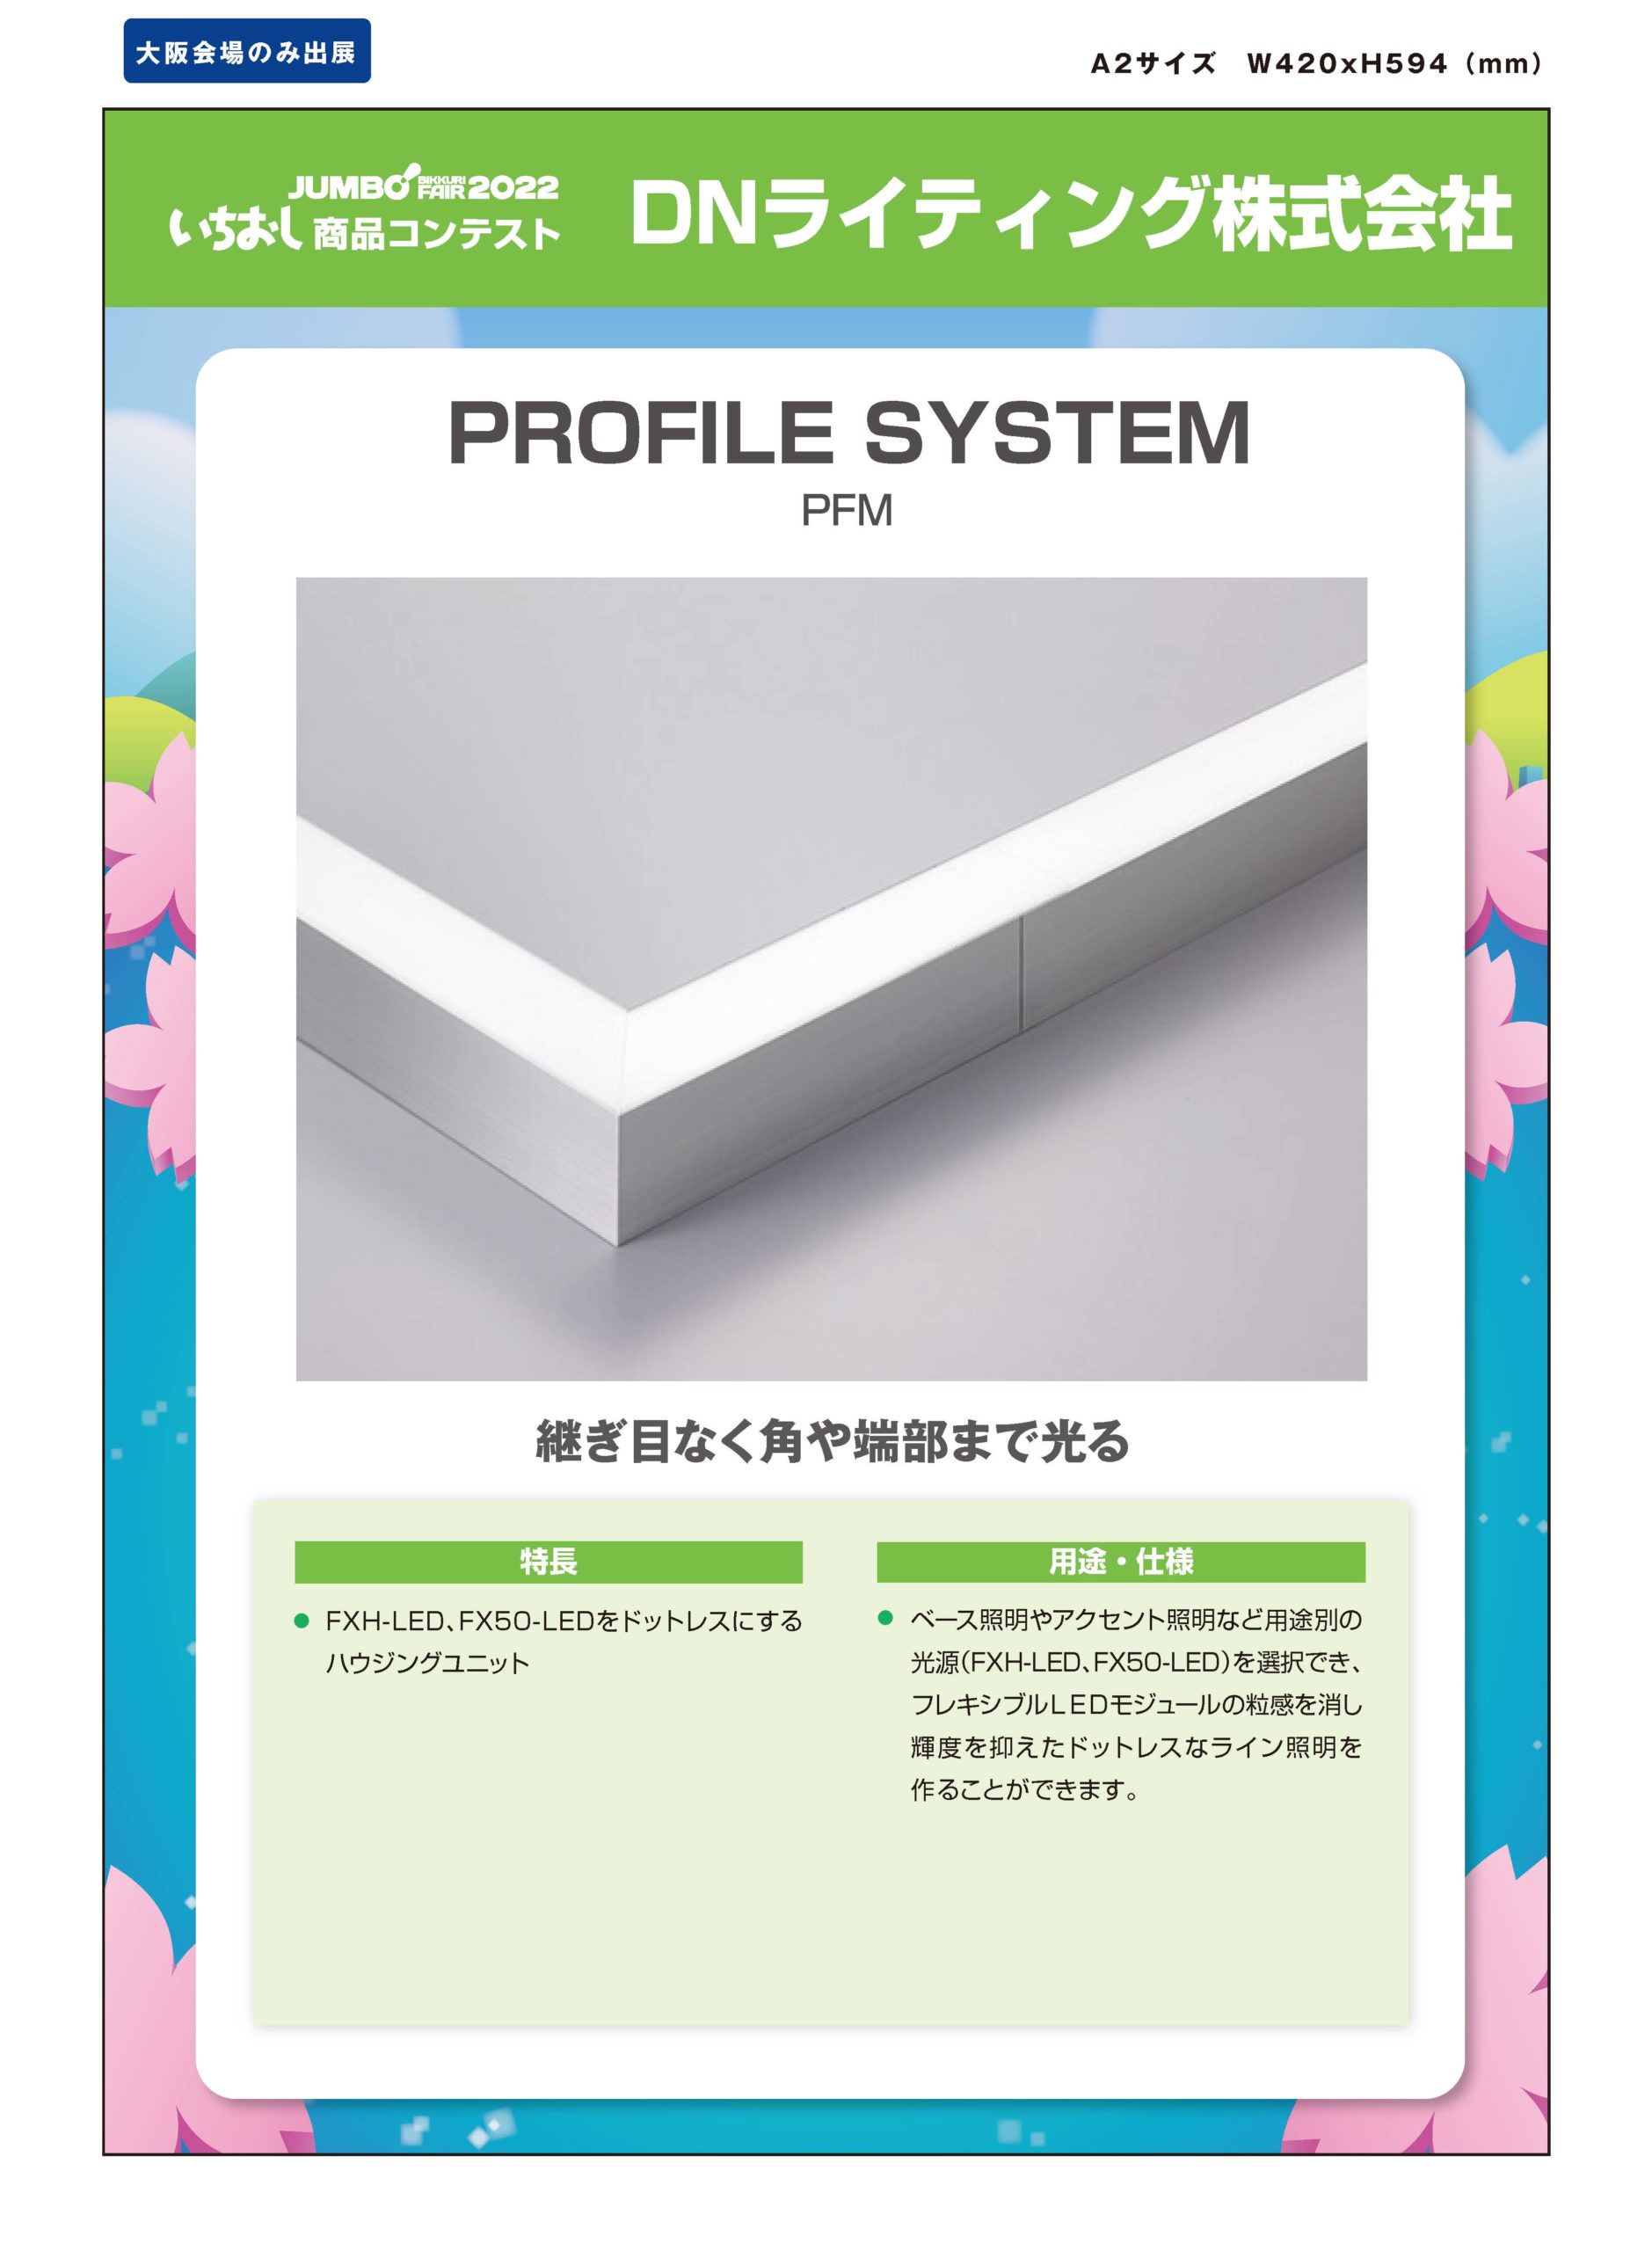 「PROFILE SYSTEM」DNライティング株式会社の画像